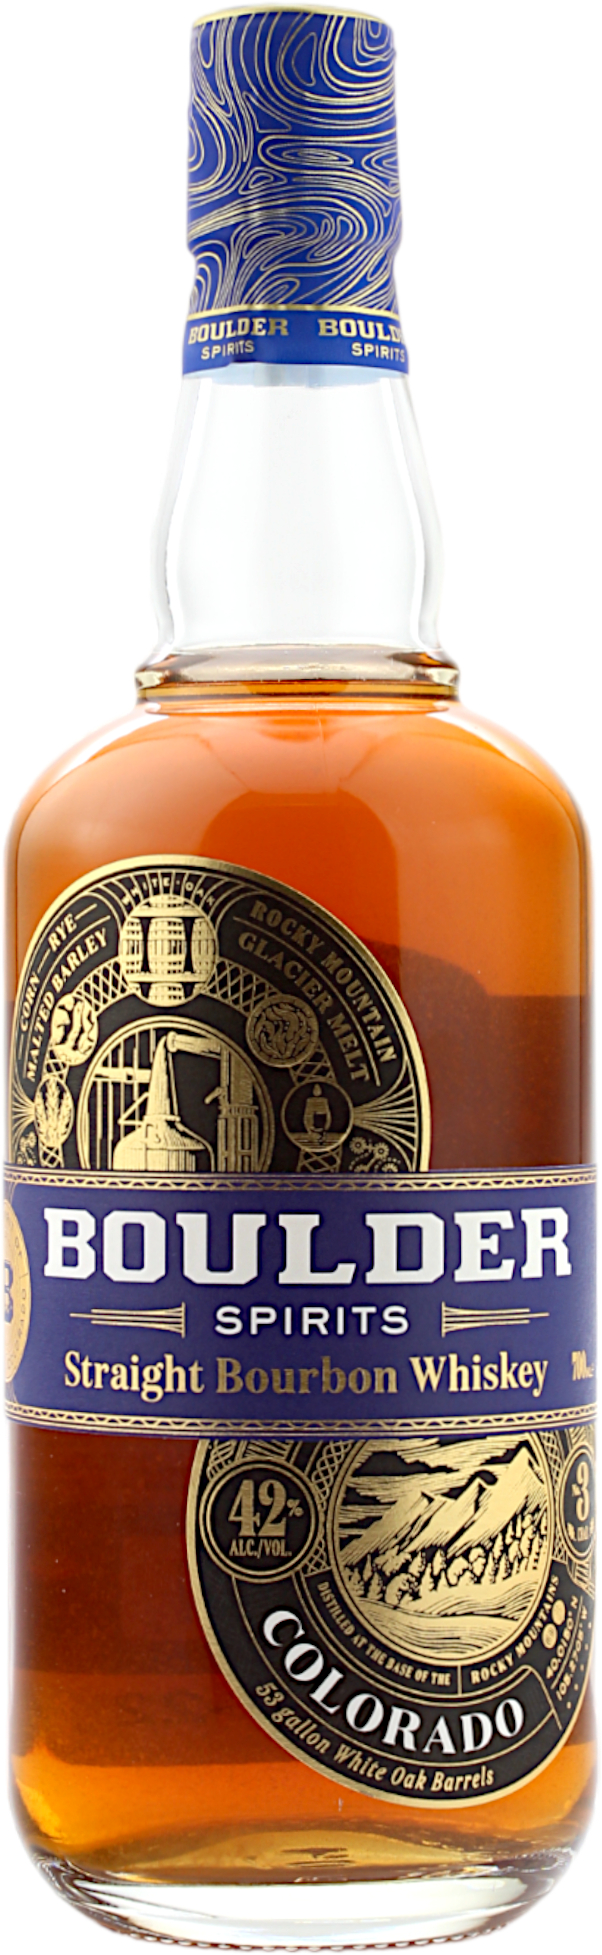 Boulder Straight Bourbon Whiskey 42.0% 0,7l